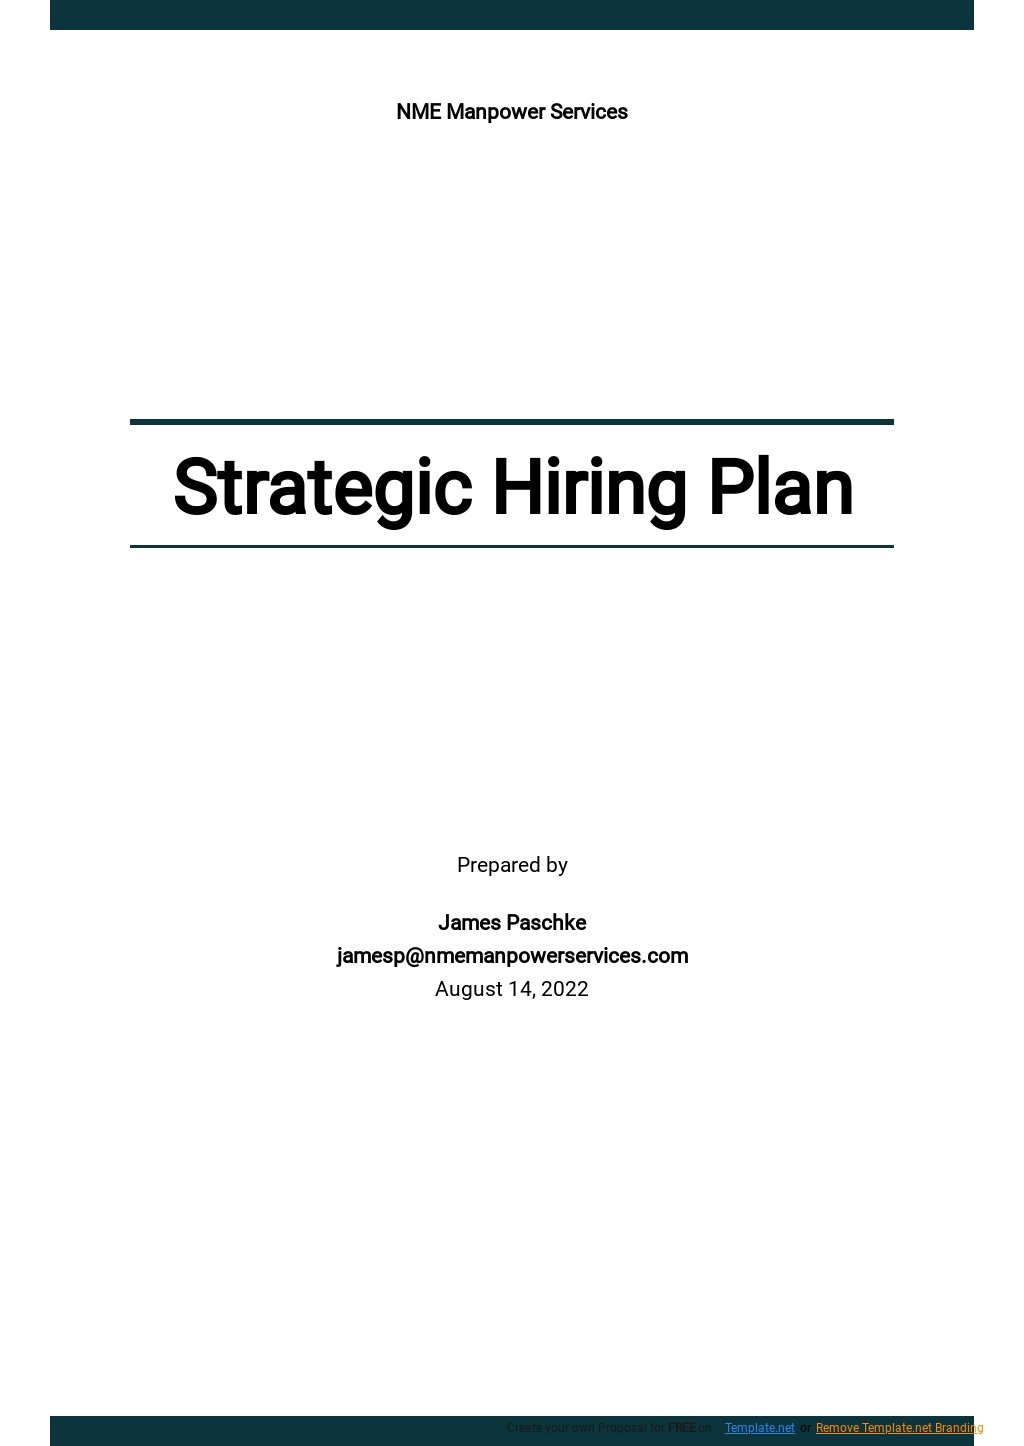 Strategic Hiring Plan Template